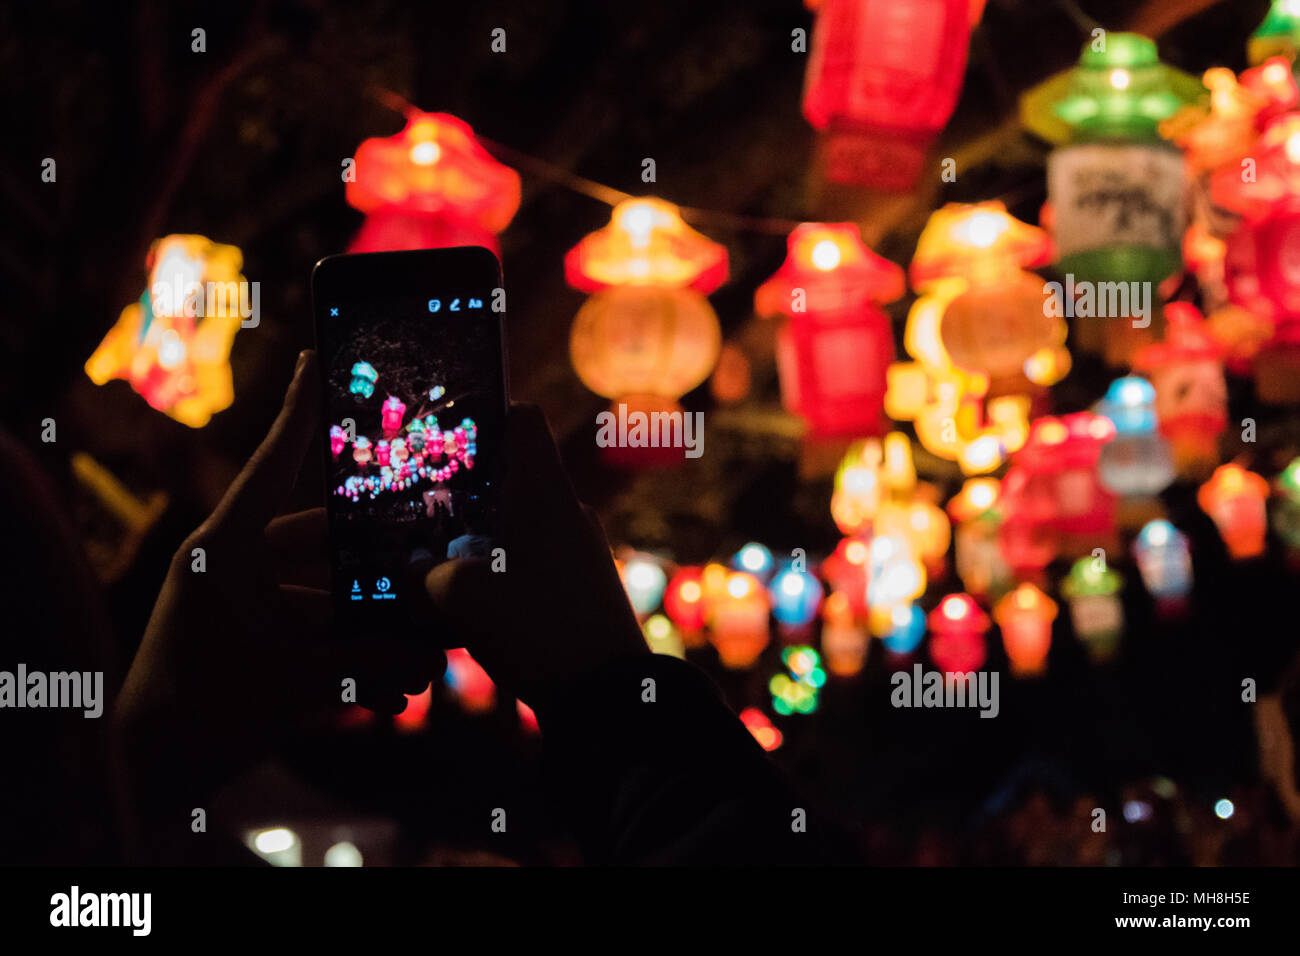 Taking a photo of lanterns at night Stock Photo